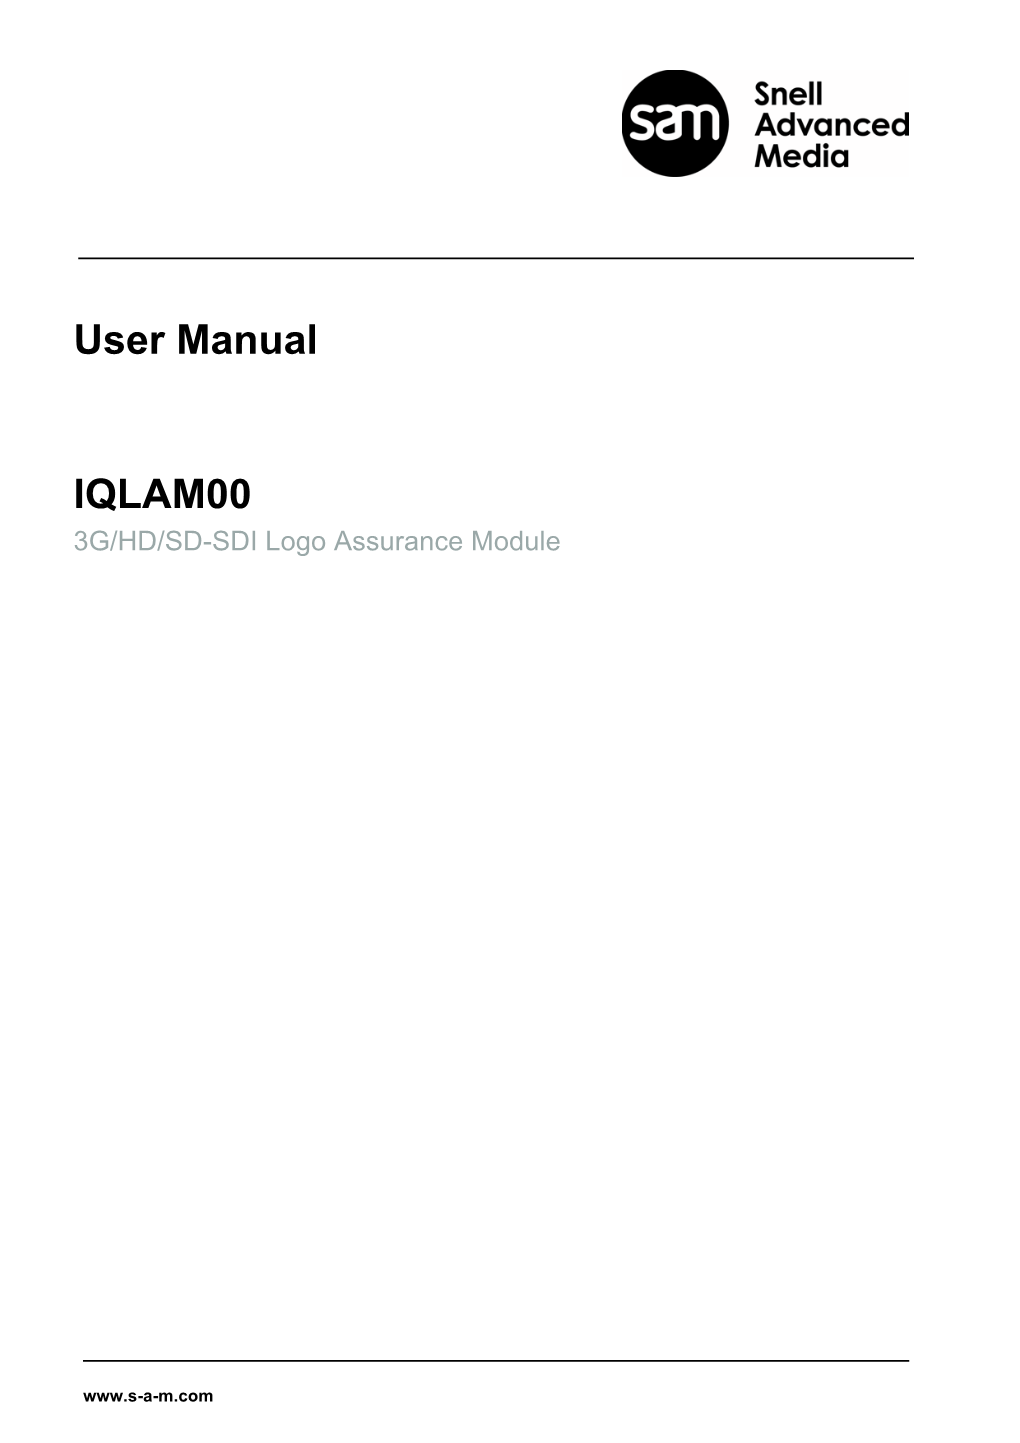 User Manual IQLAM00